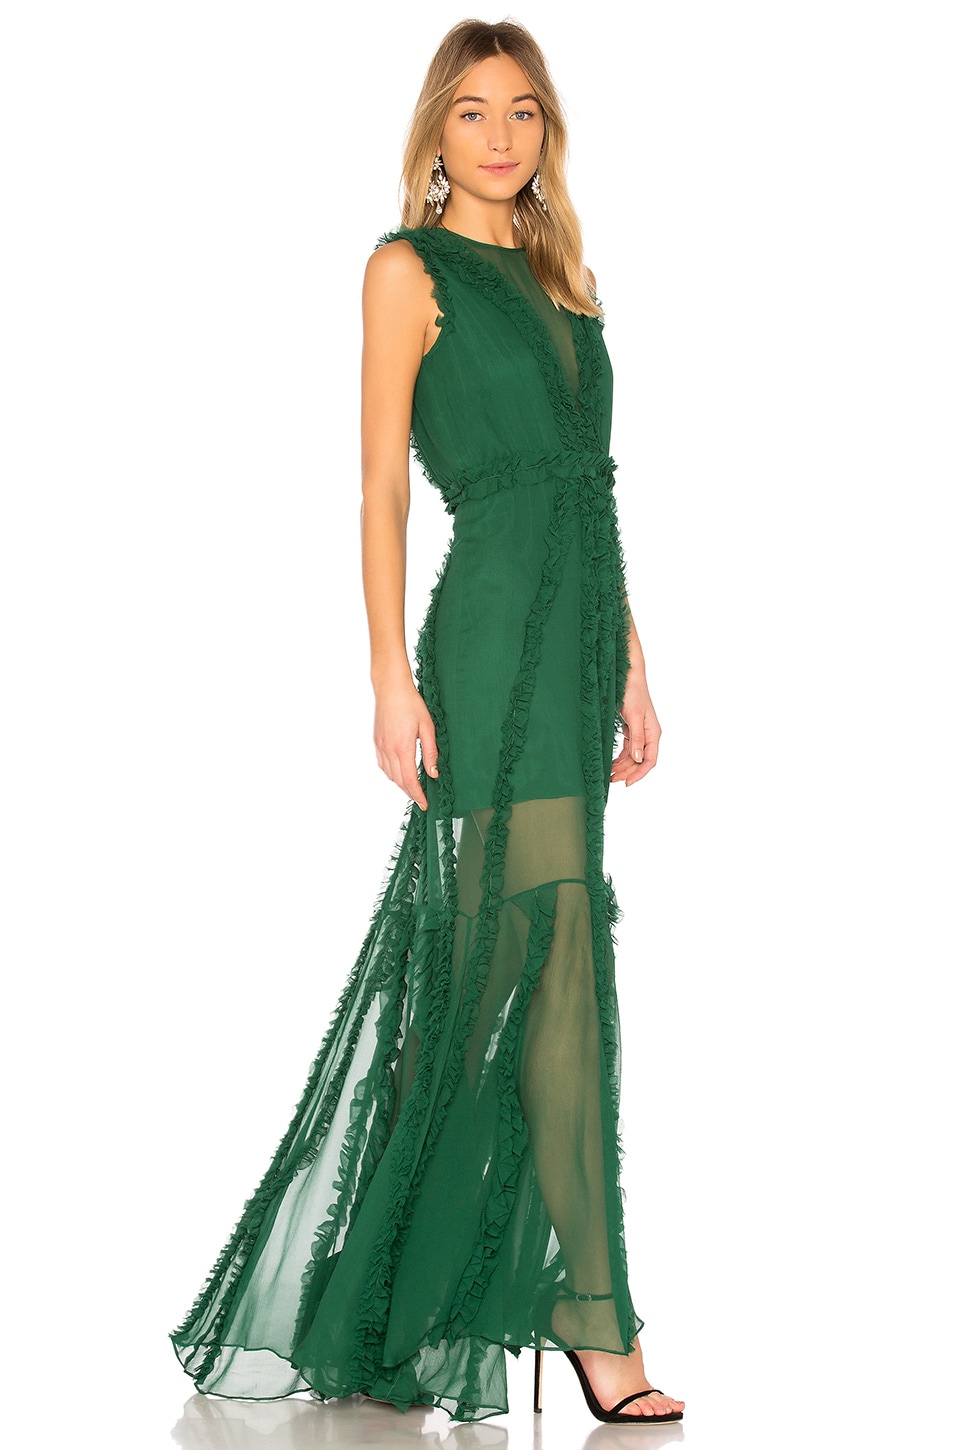 revolve emerald green dress